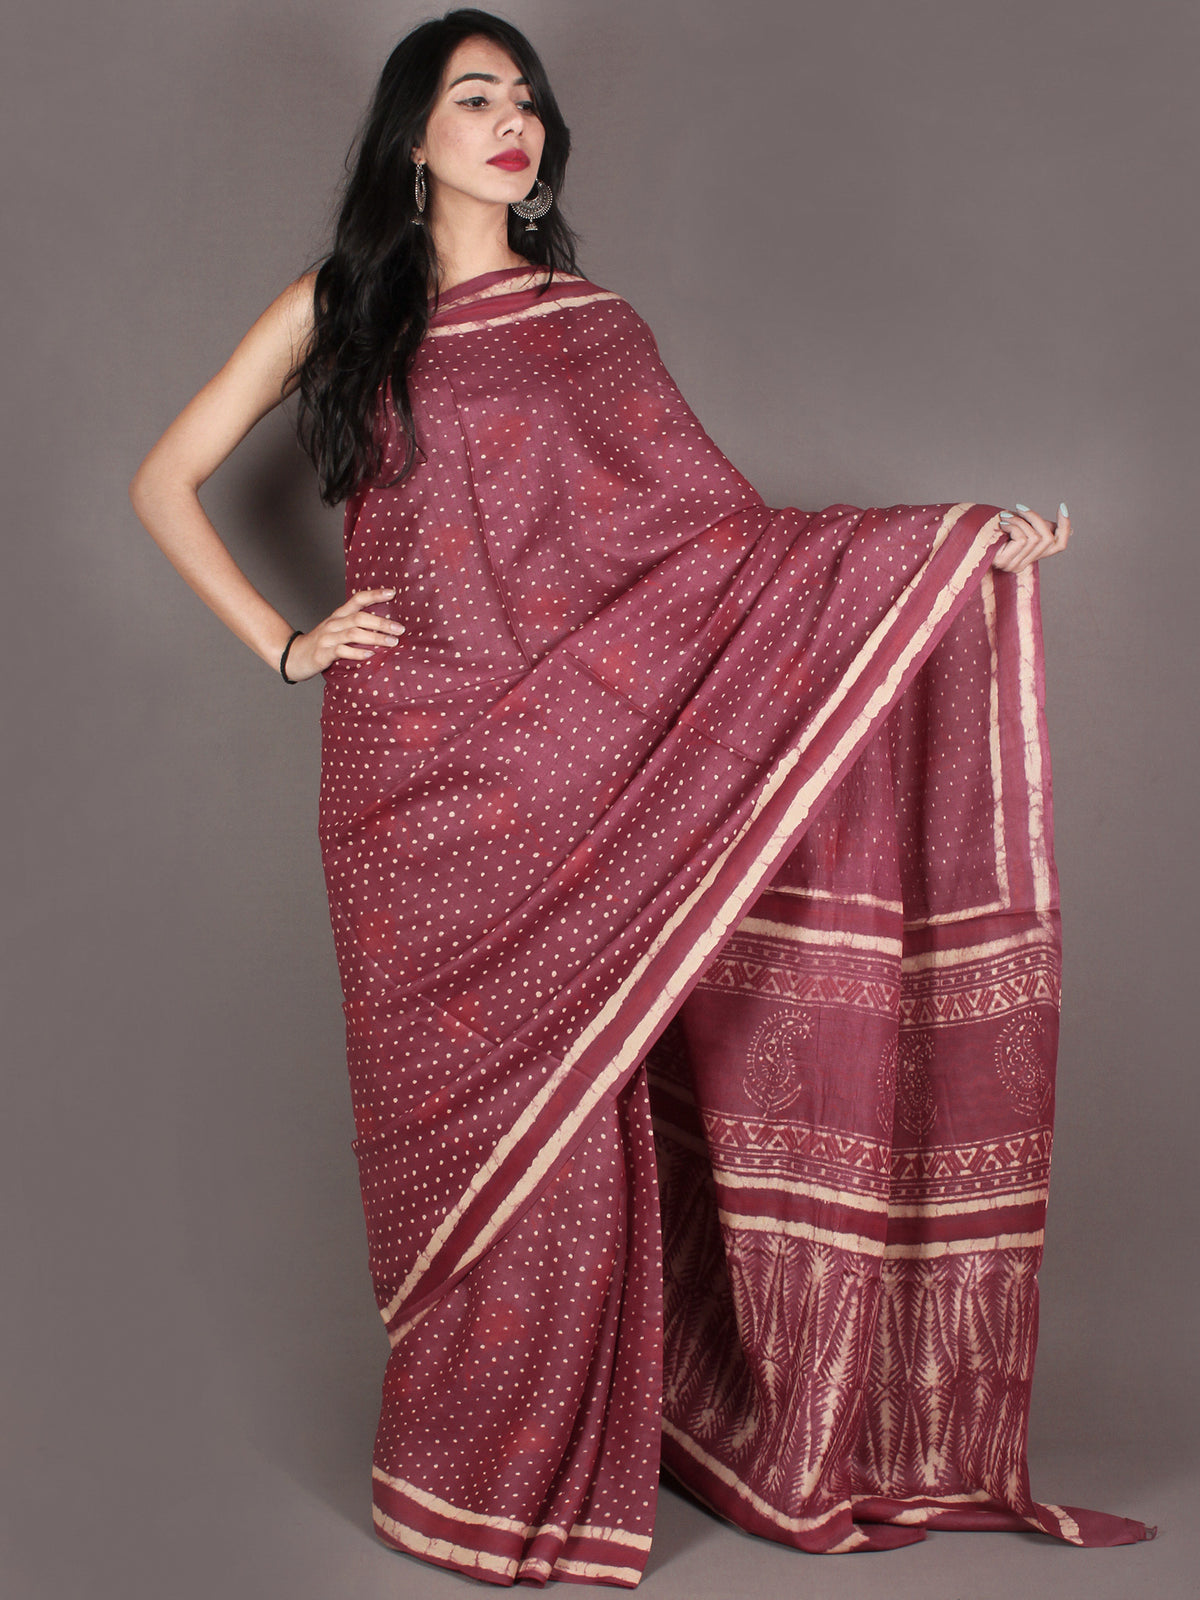 Tussar Handloom Silk Hand Block Printed Saree in Deep Onion Pink & Beige - S03170953